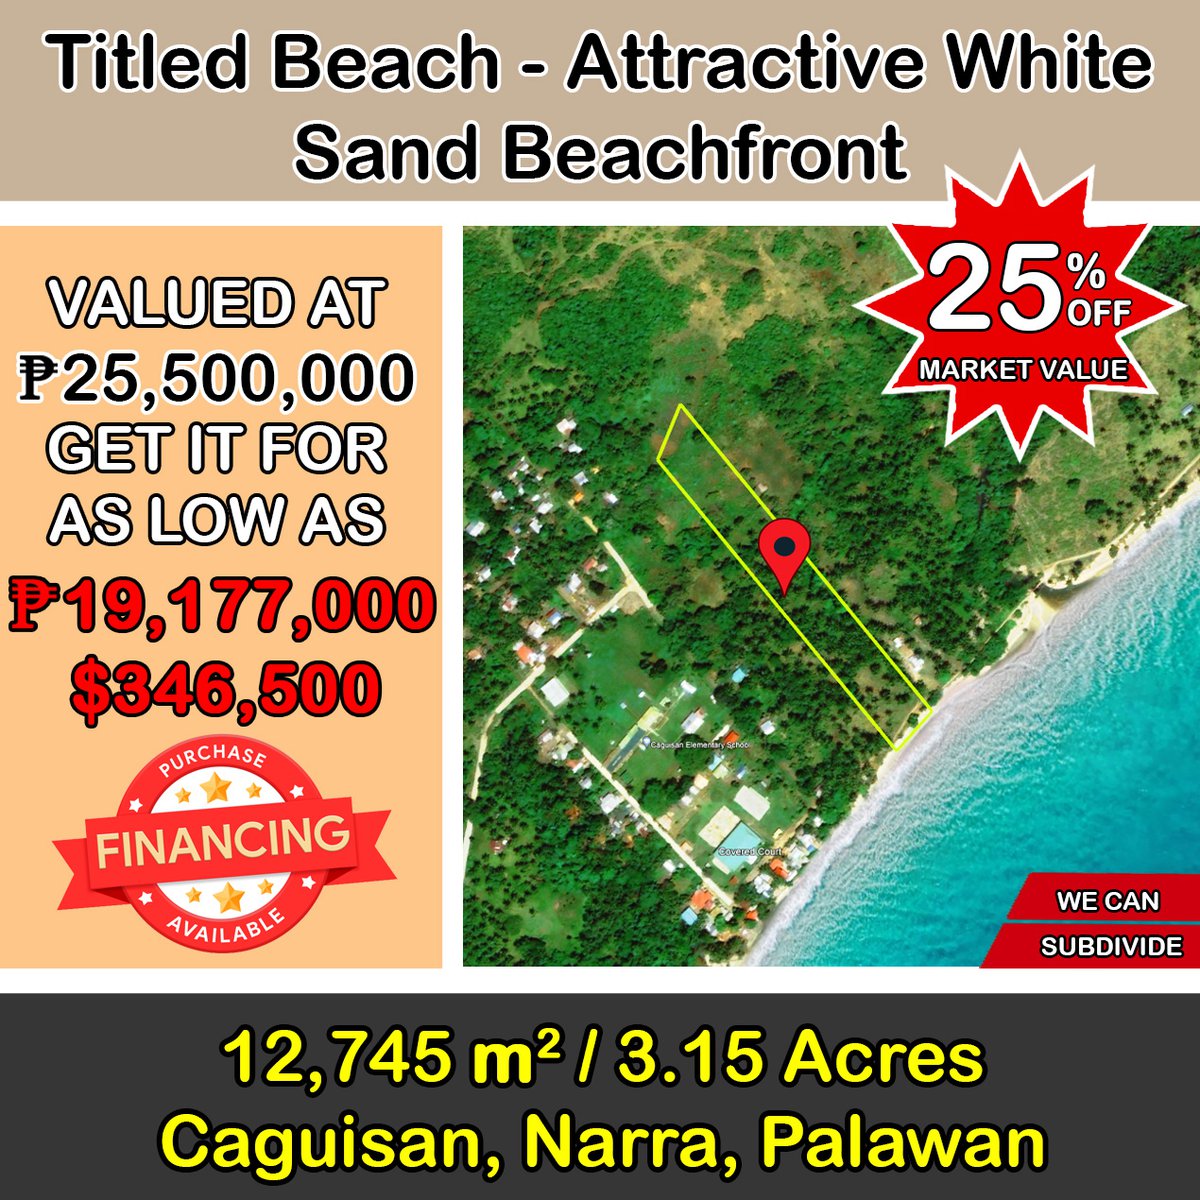 Titled Beach - Attractive White Sand Beachfront